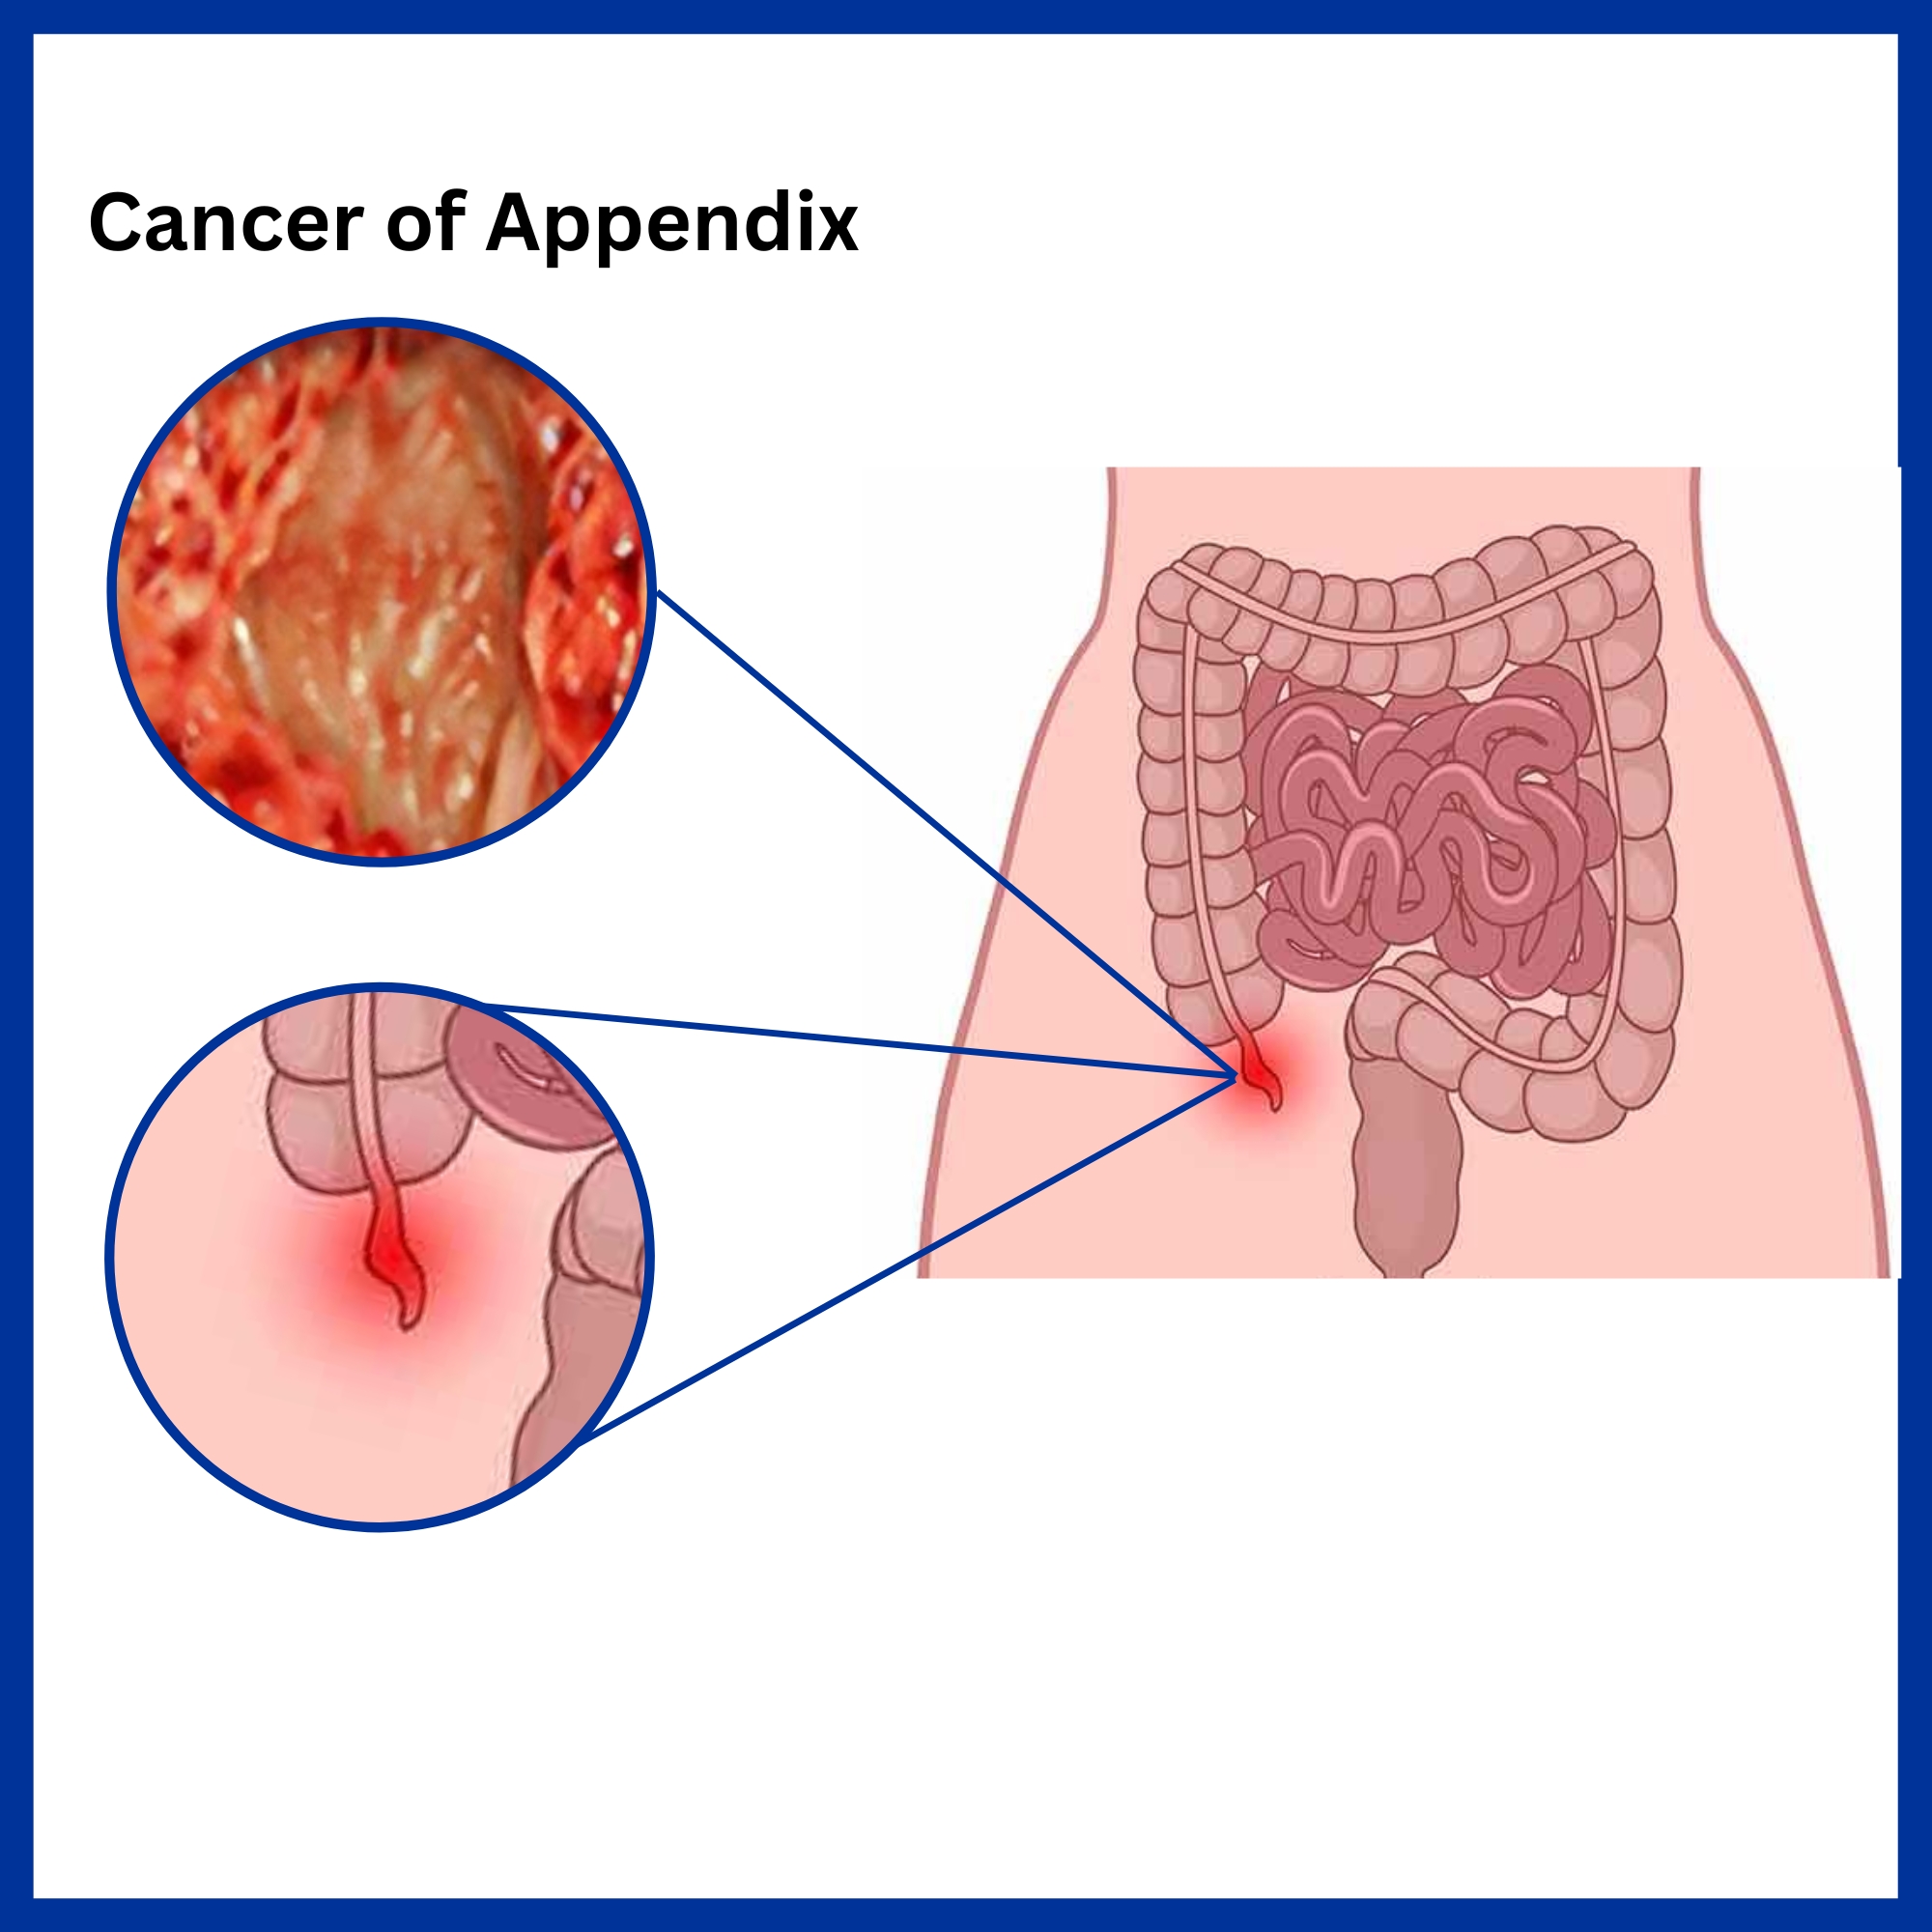 Cancer of Appendix